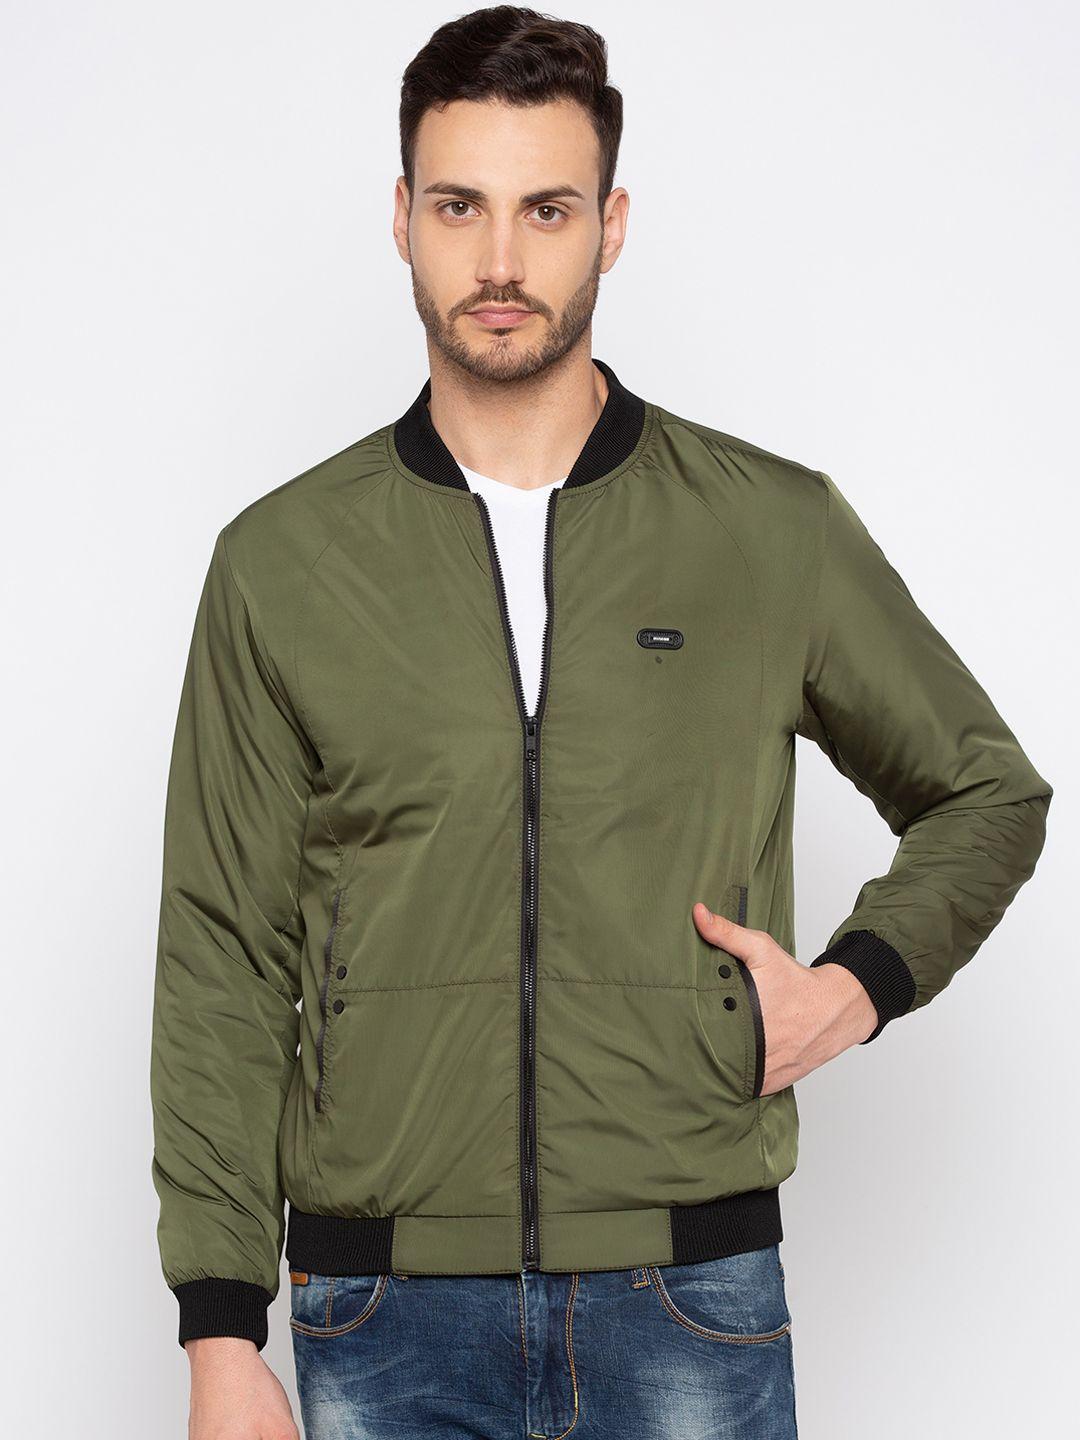 status quo men olive green solid slim fit lightweight bomber jacket